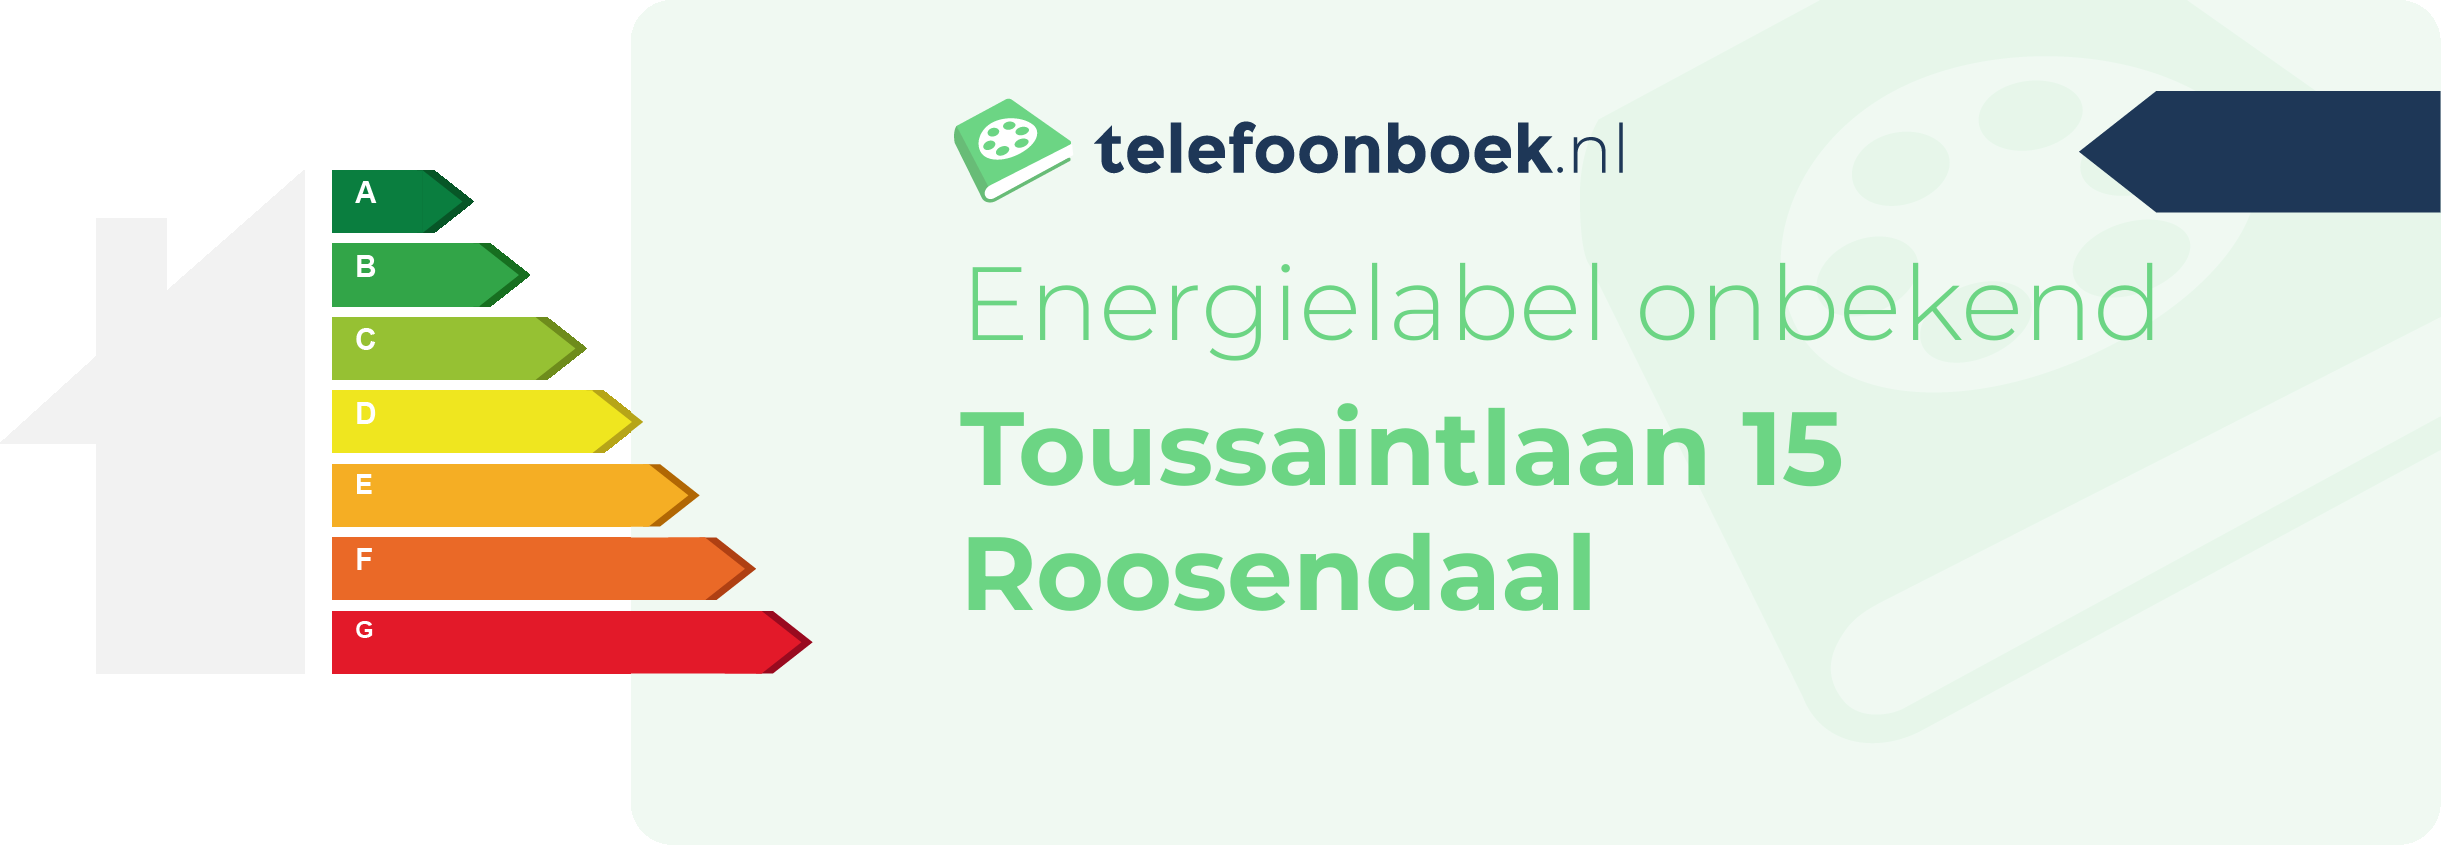 Energielabel Toussaintlaan 15 Roosendaal